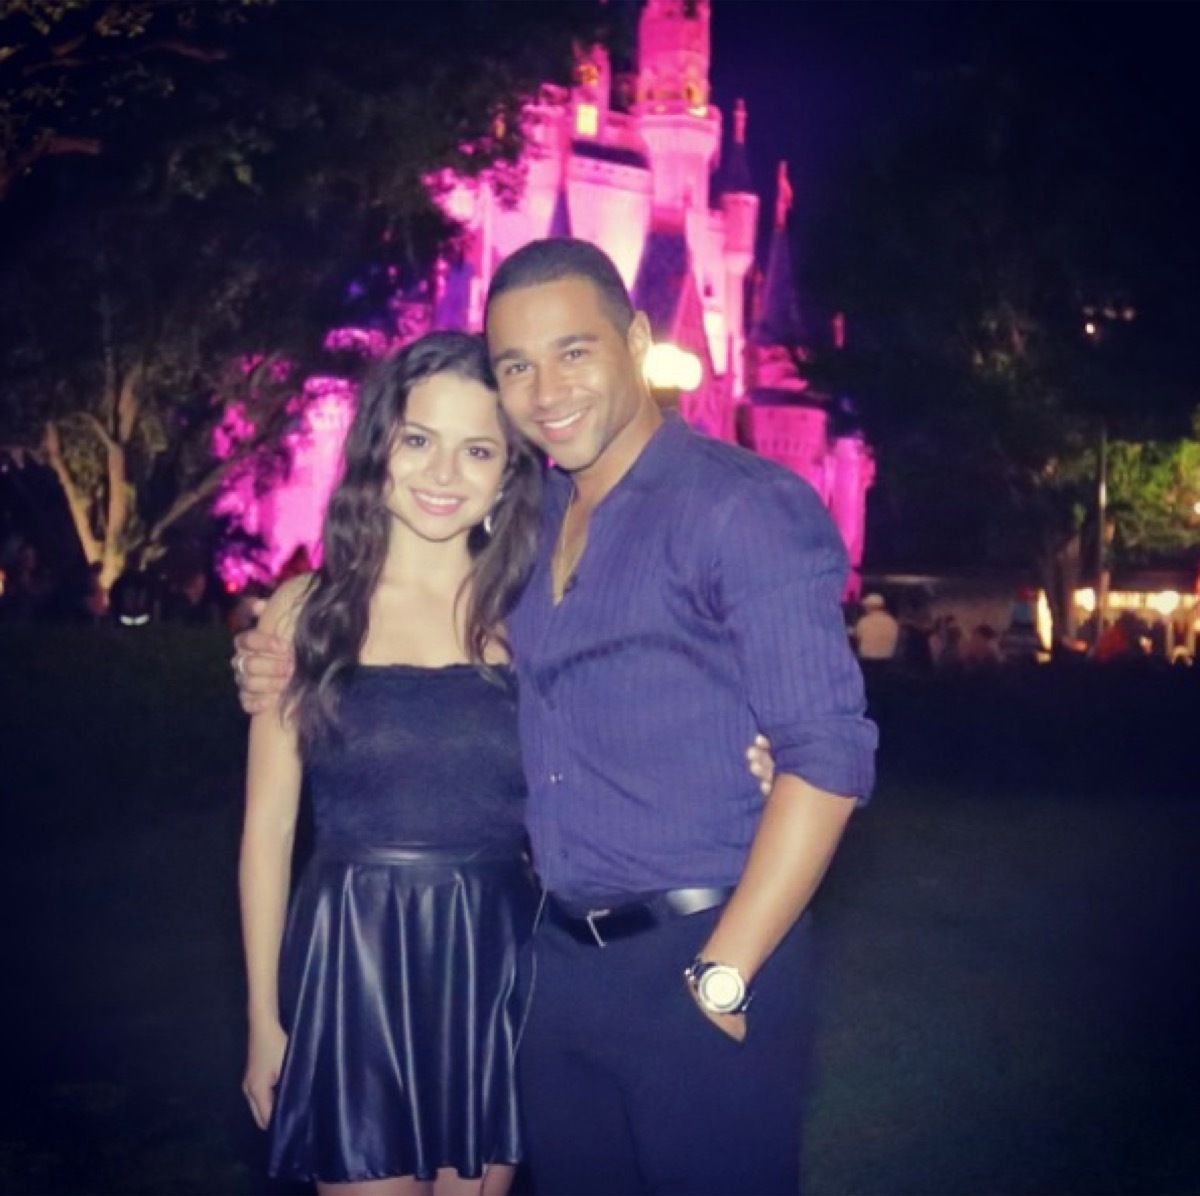 corbin bleu with girlfriend in front of castle at disney world, disney celebs